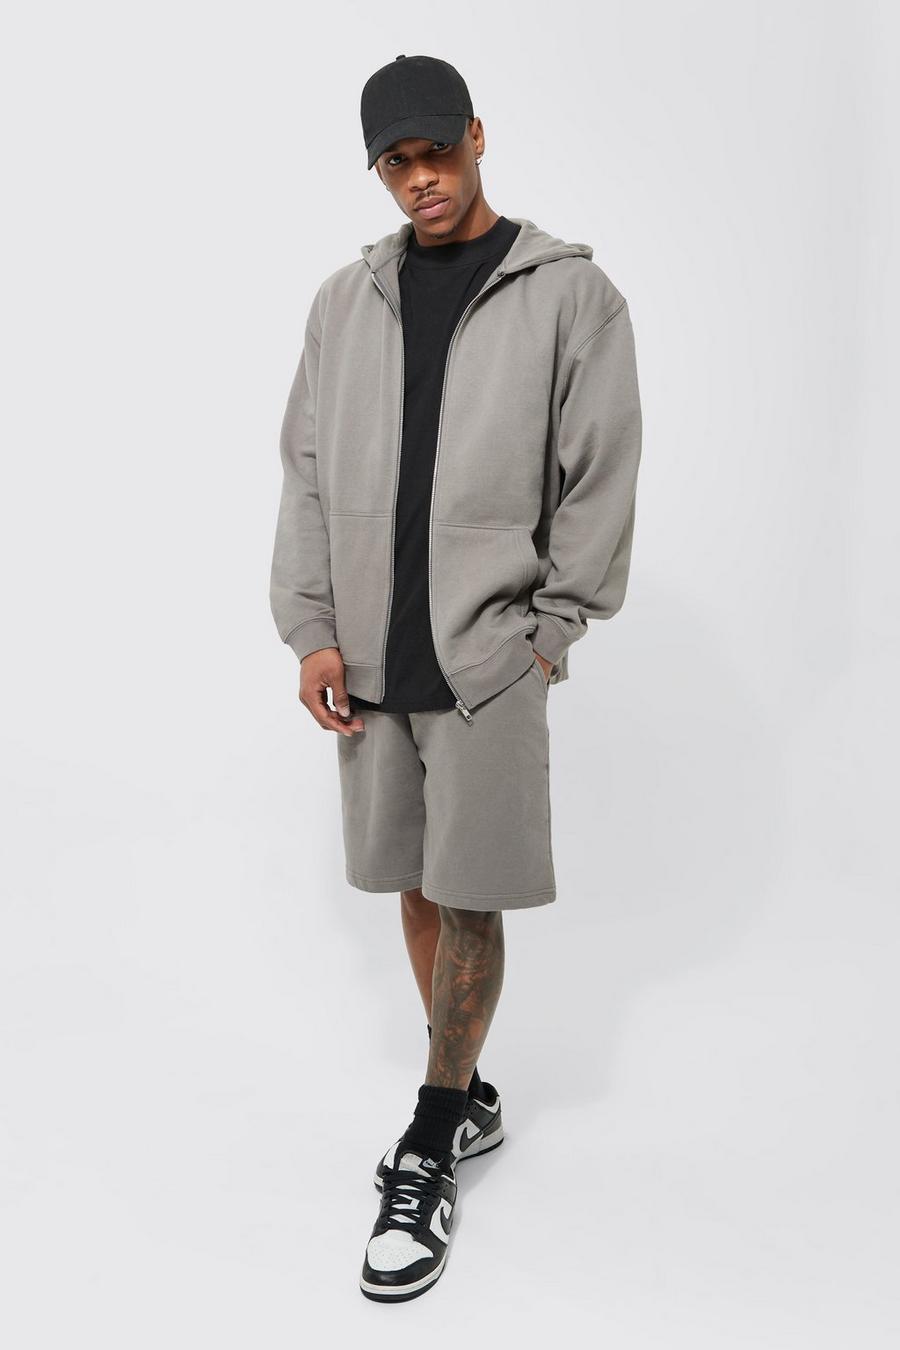 Kurzer Basic Trainingsanzug mit Kapuze und Reißverschluss, Charcoal grey